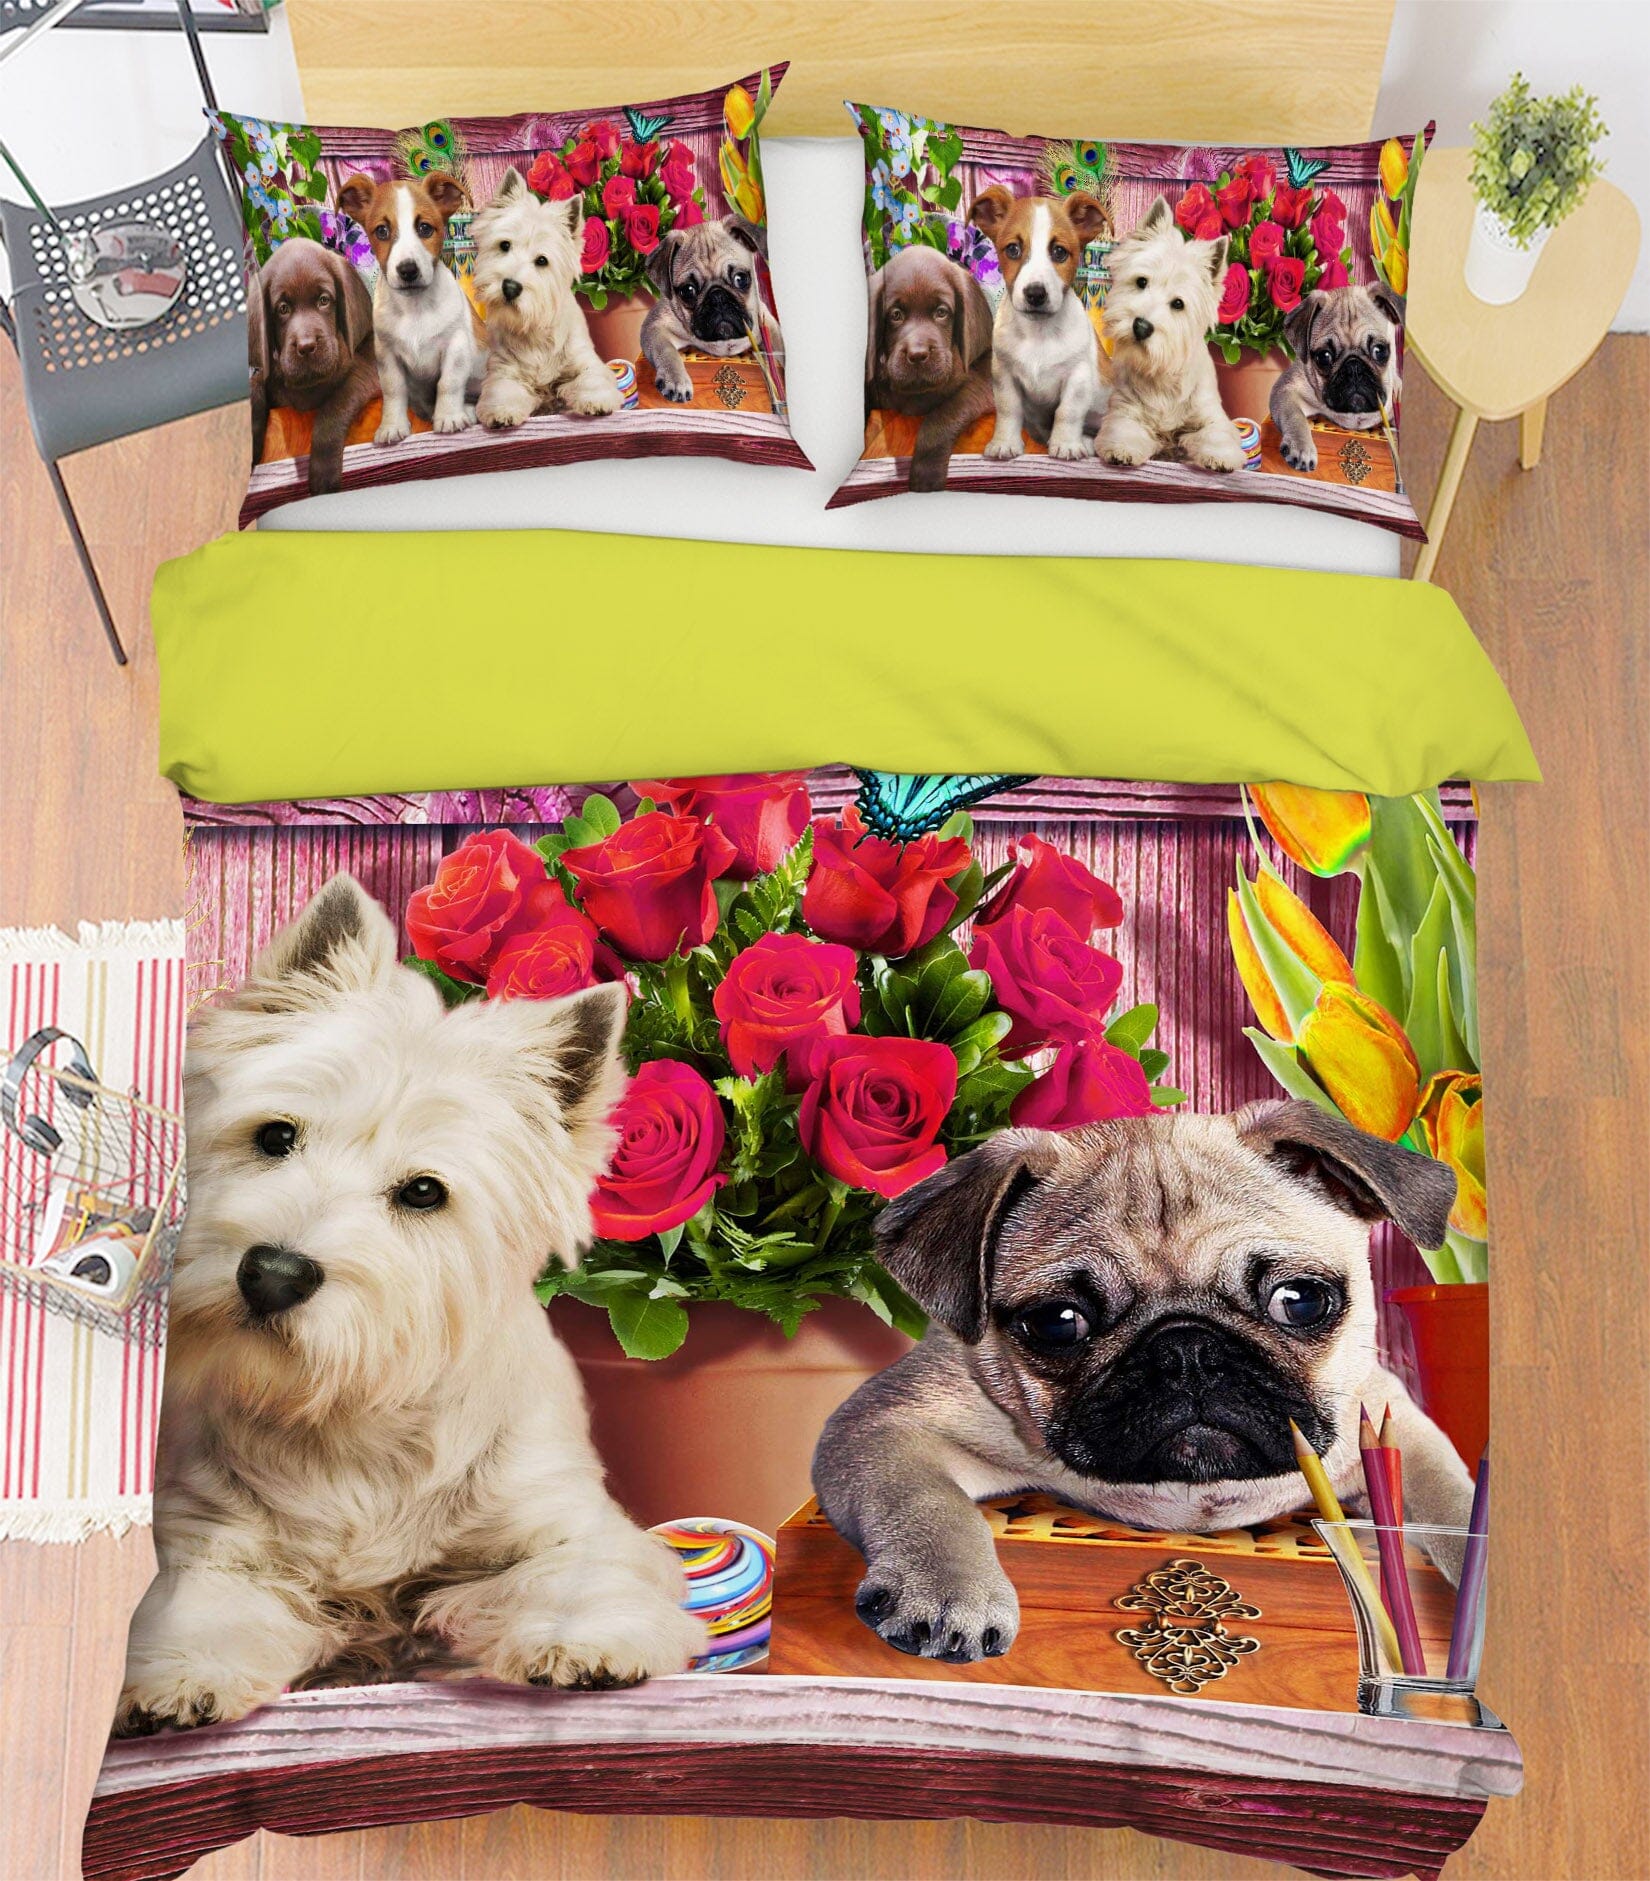 3D Cute Dog 2109 Adrian Chesterman Bedding Bed Pillowcases Quilt Quiet Covers AJ Creativity Home 